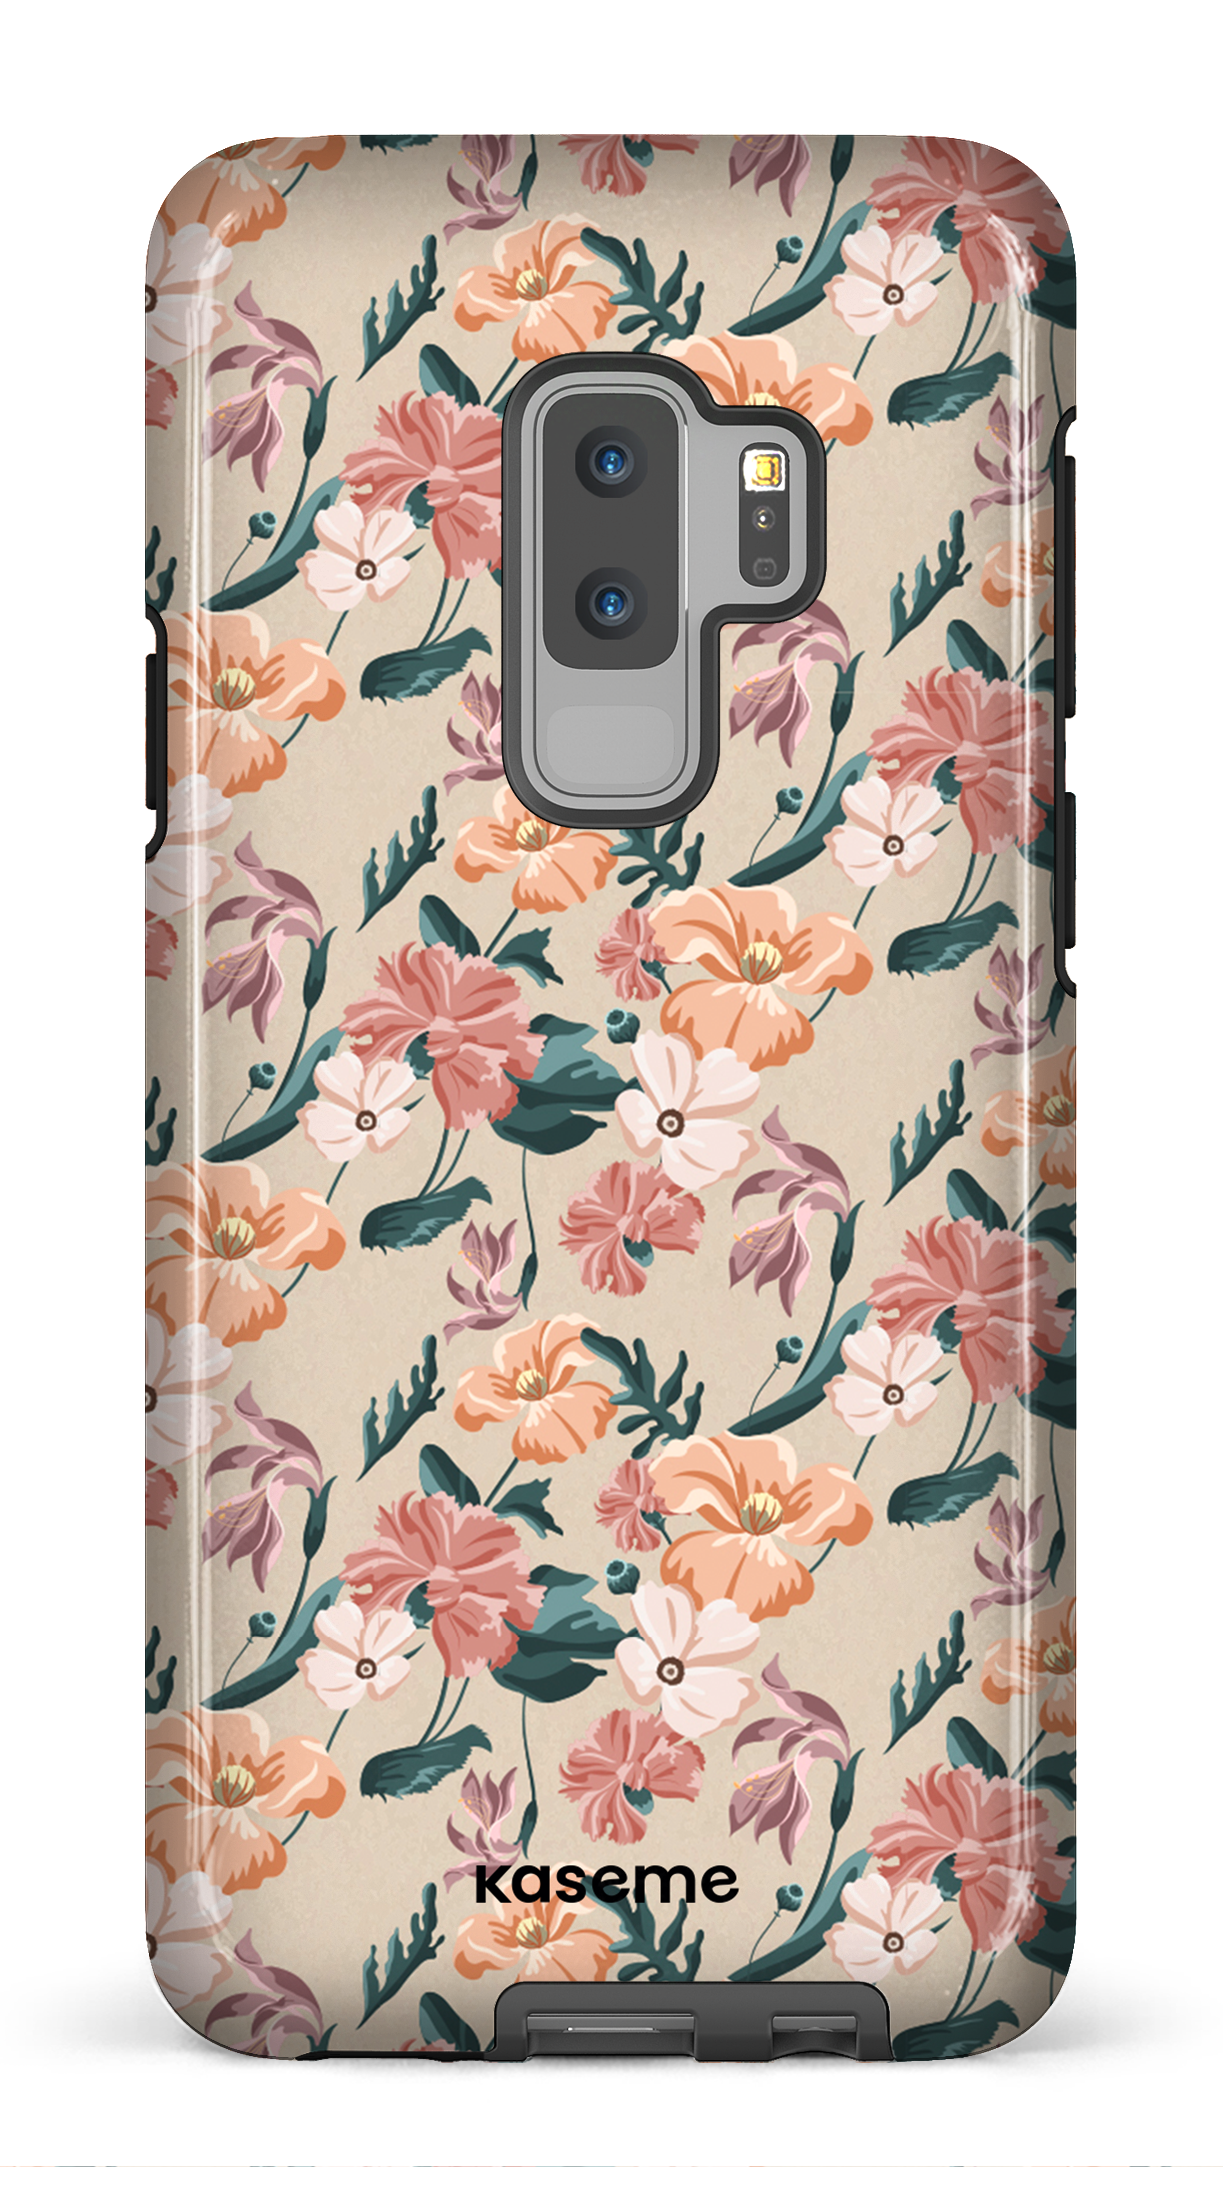 Penelope - Galaxy S9 Plus